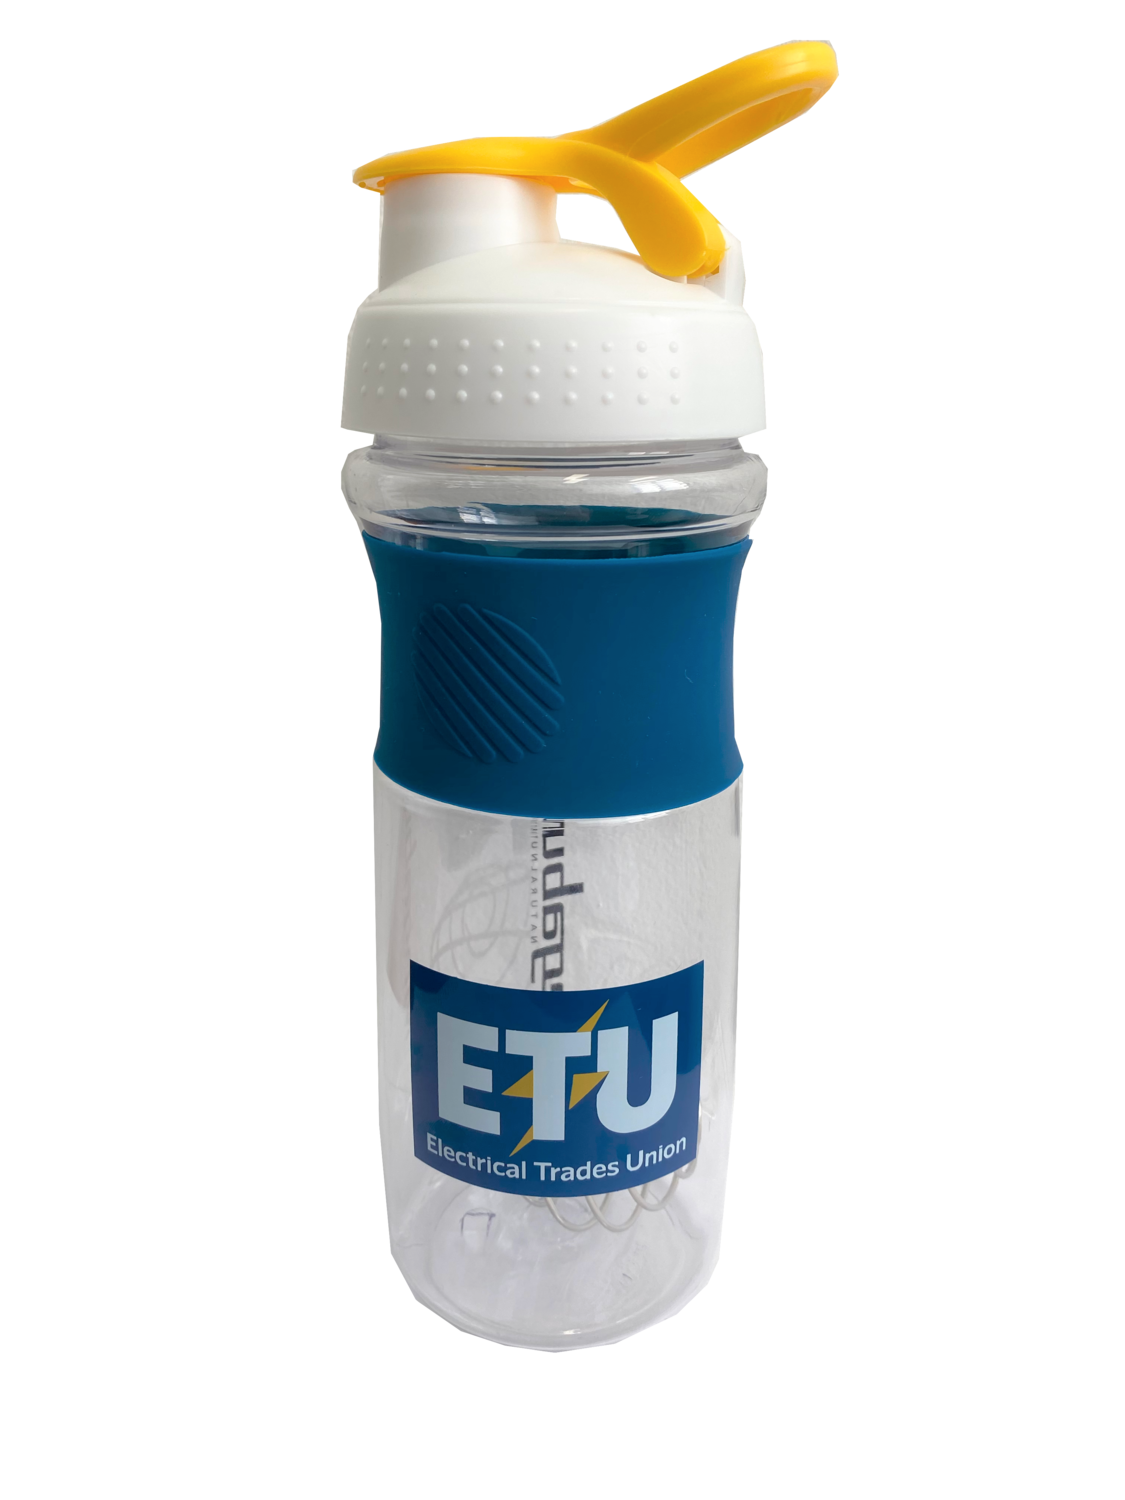 ETU blender bottle with grip